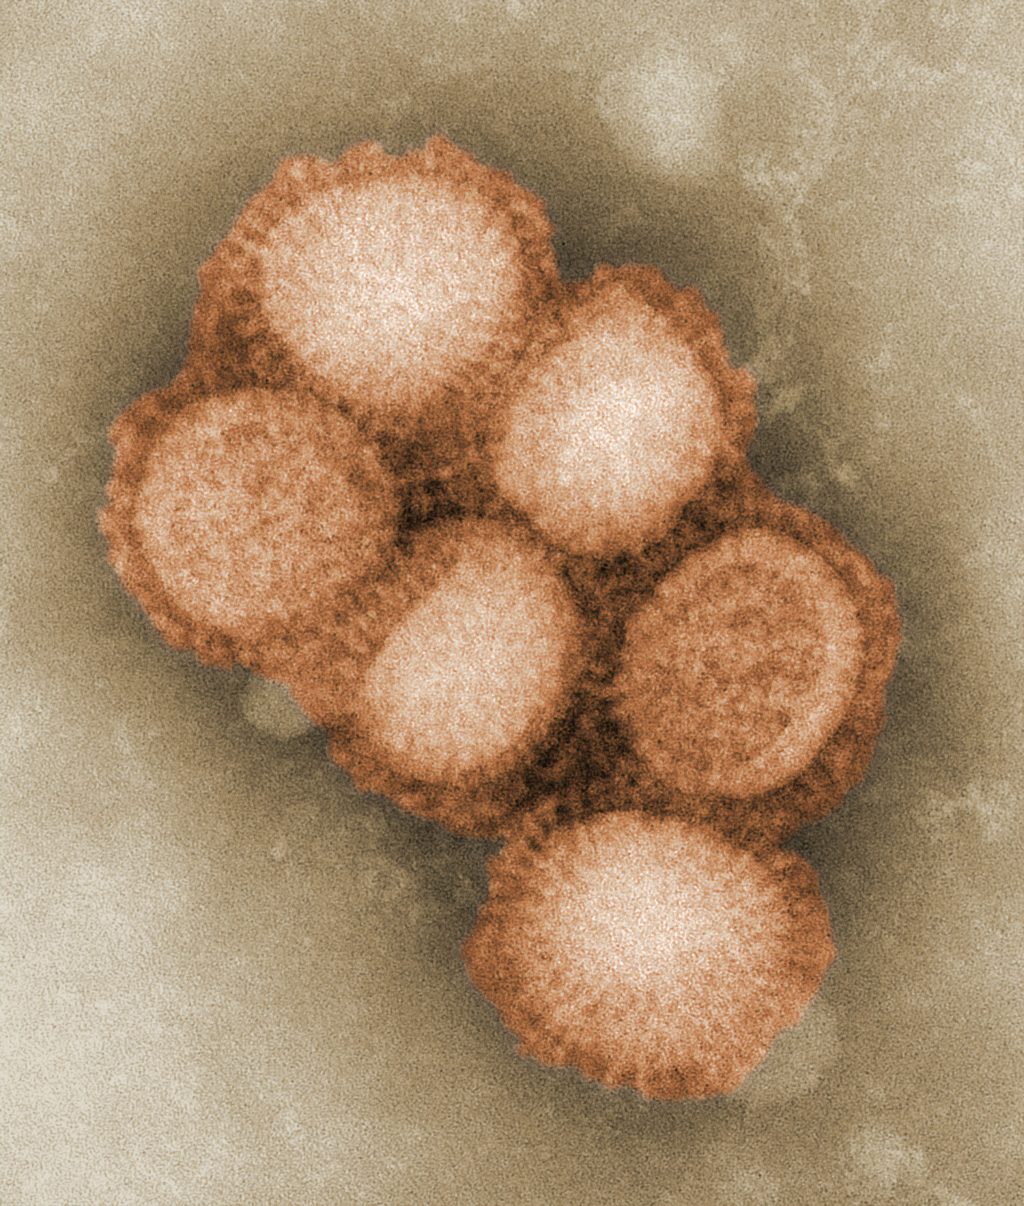 Coronavirus Electron Image | Stock Image